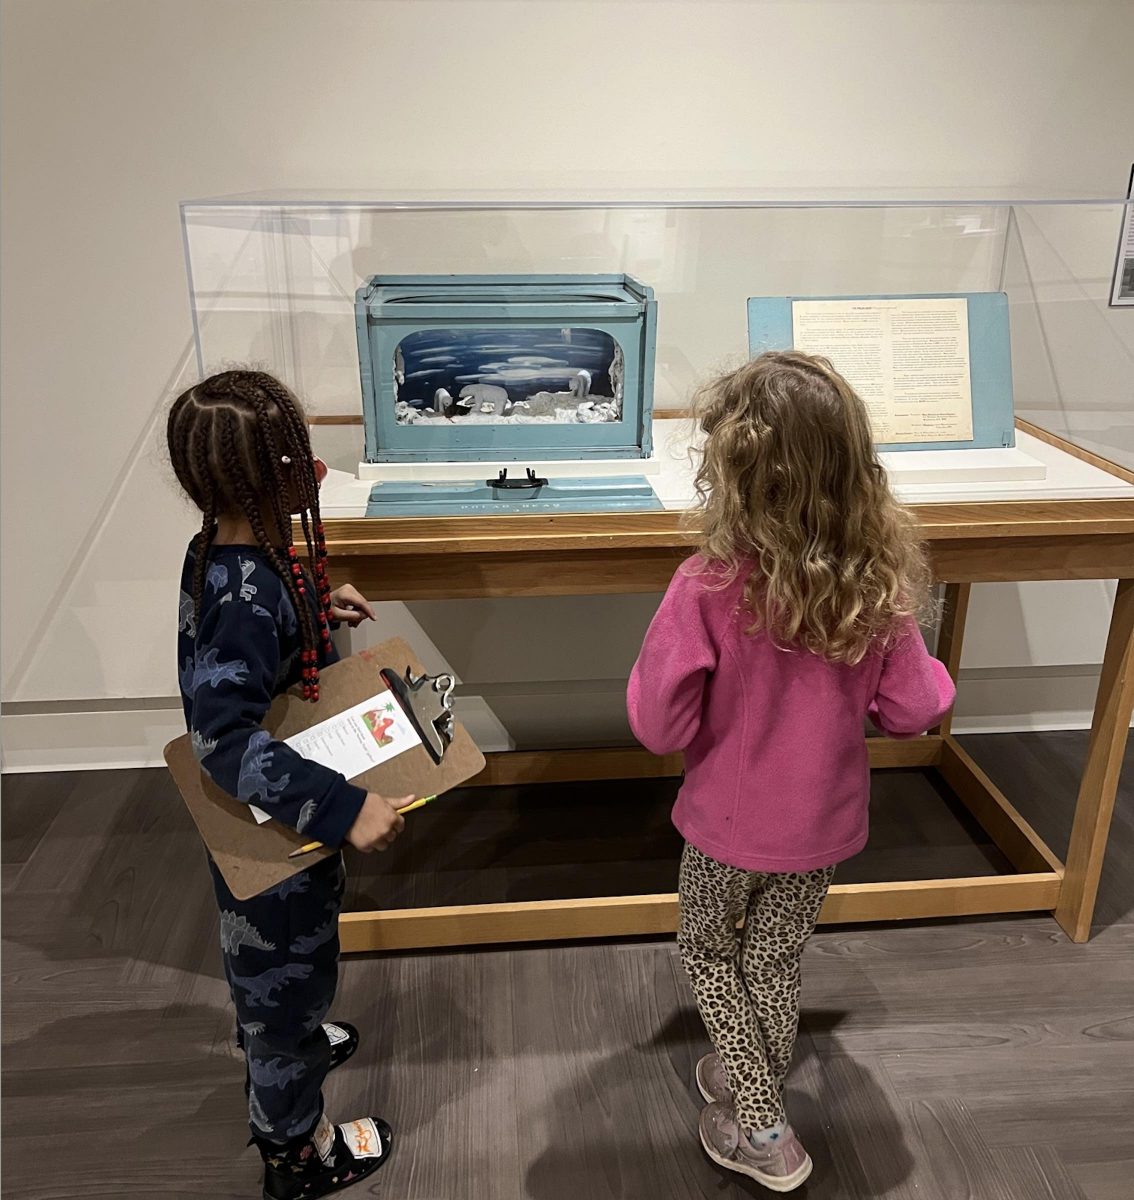 2 children looking at art